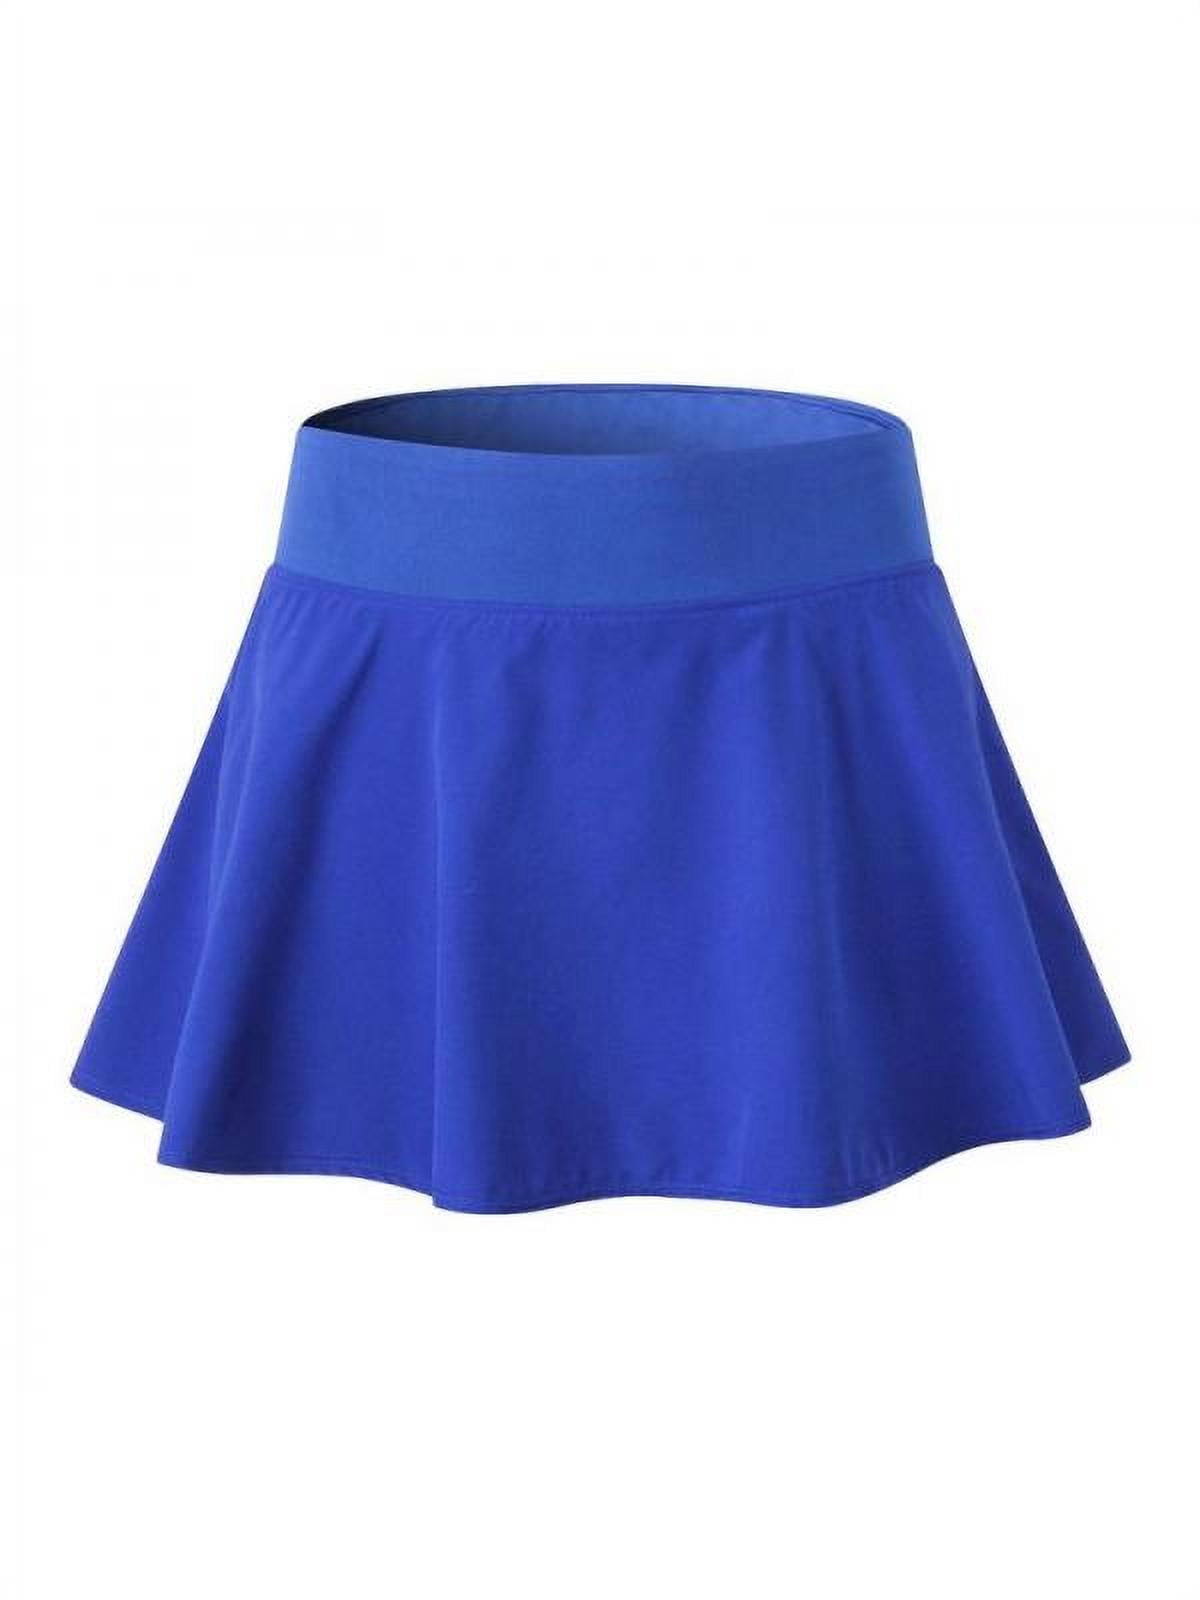 Luxsea Tennis Skorts for Women Golf Skirts with Pockets Athletic Sports  Running Active - Walmart.com